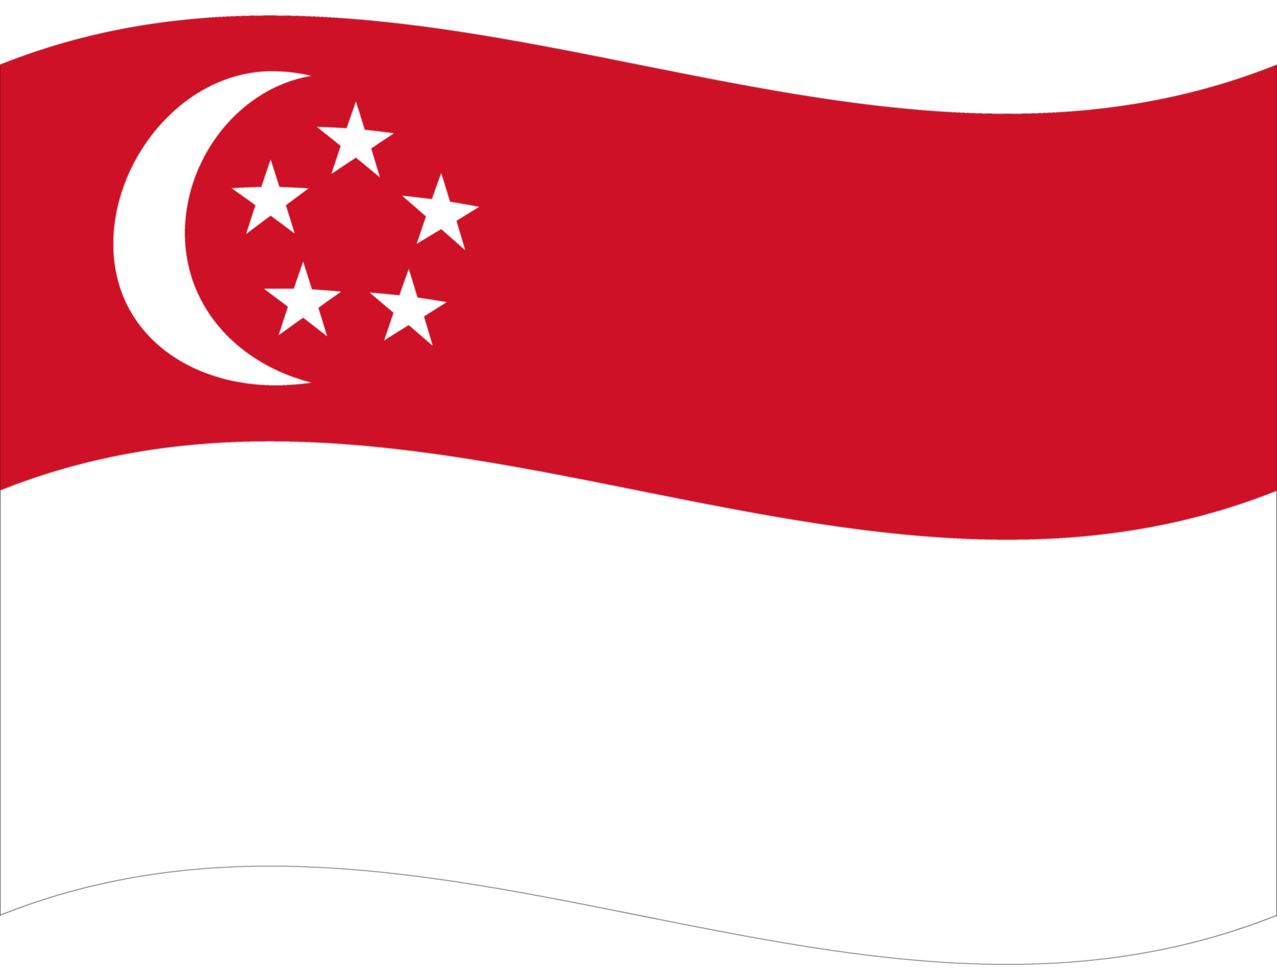 Singapore flag wave. Singapore flag. Flag of Singapore png